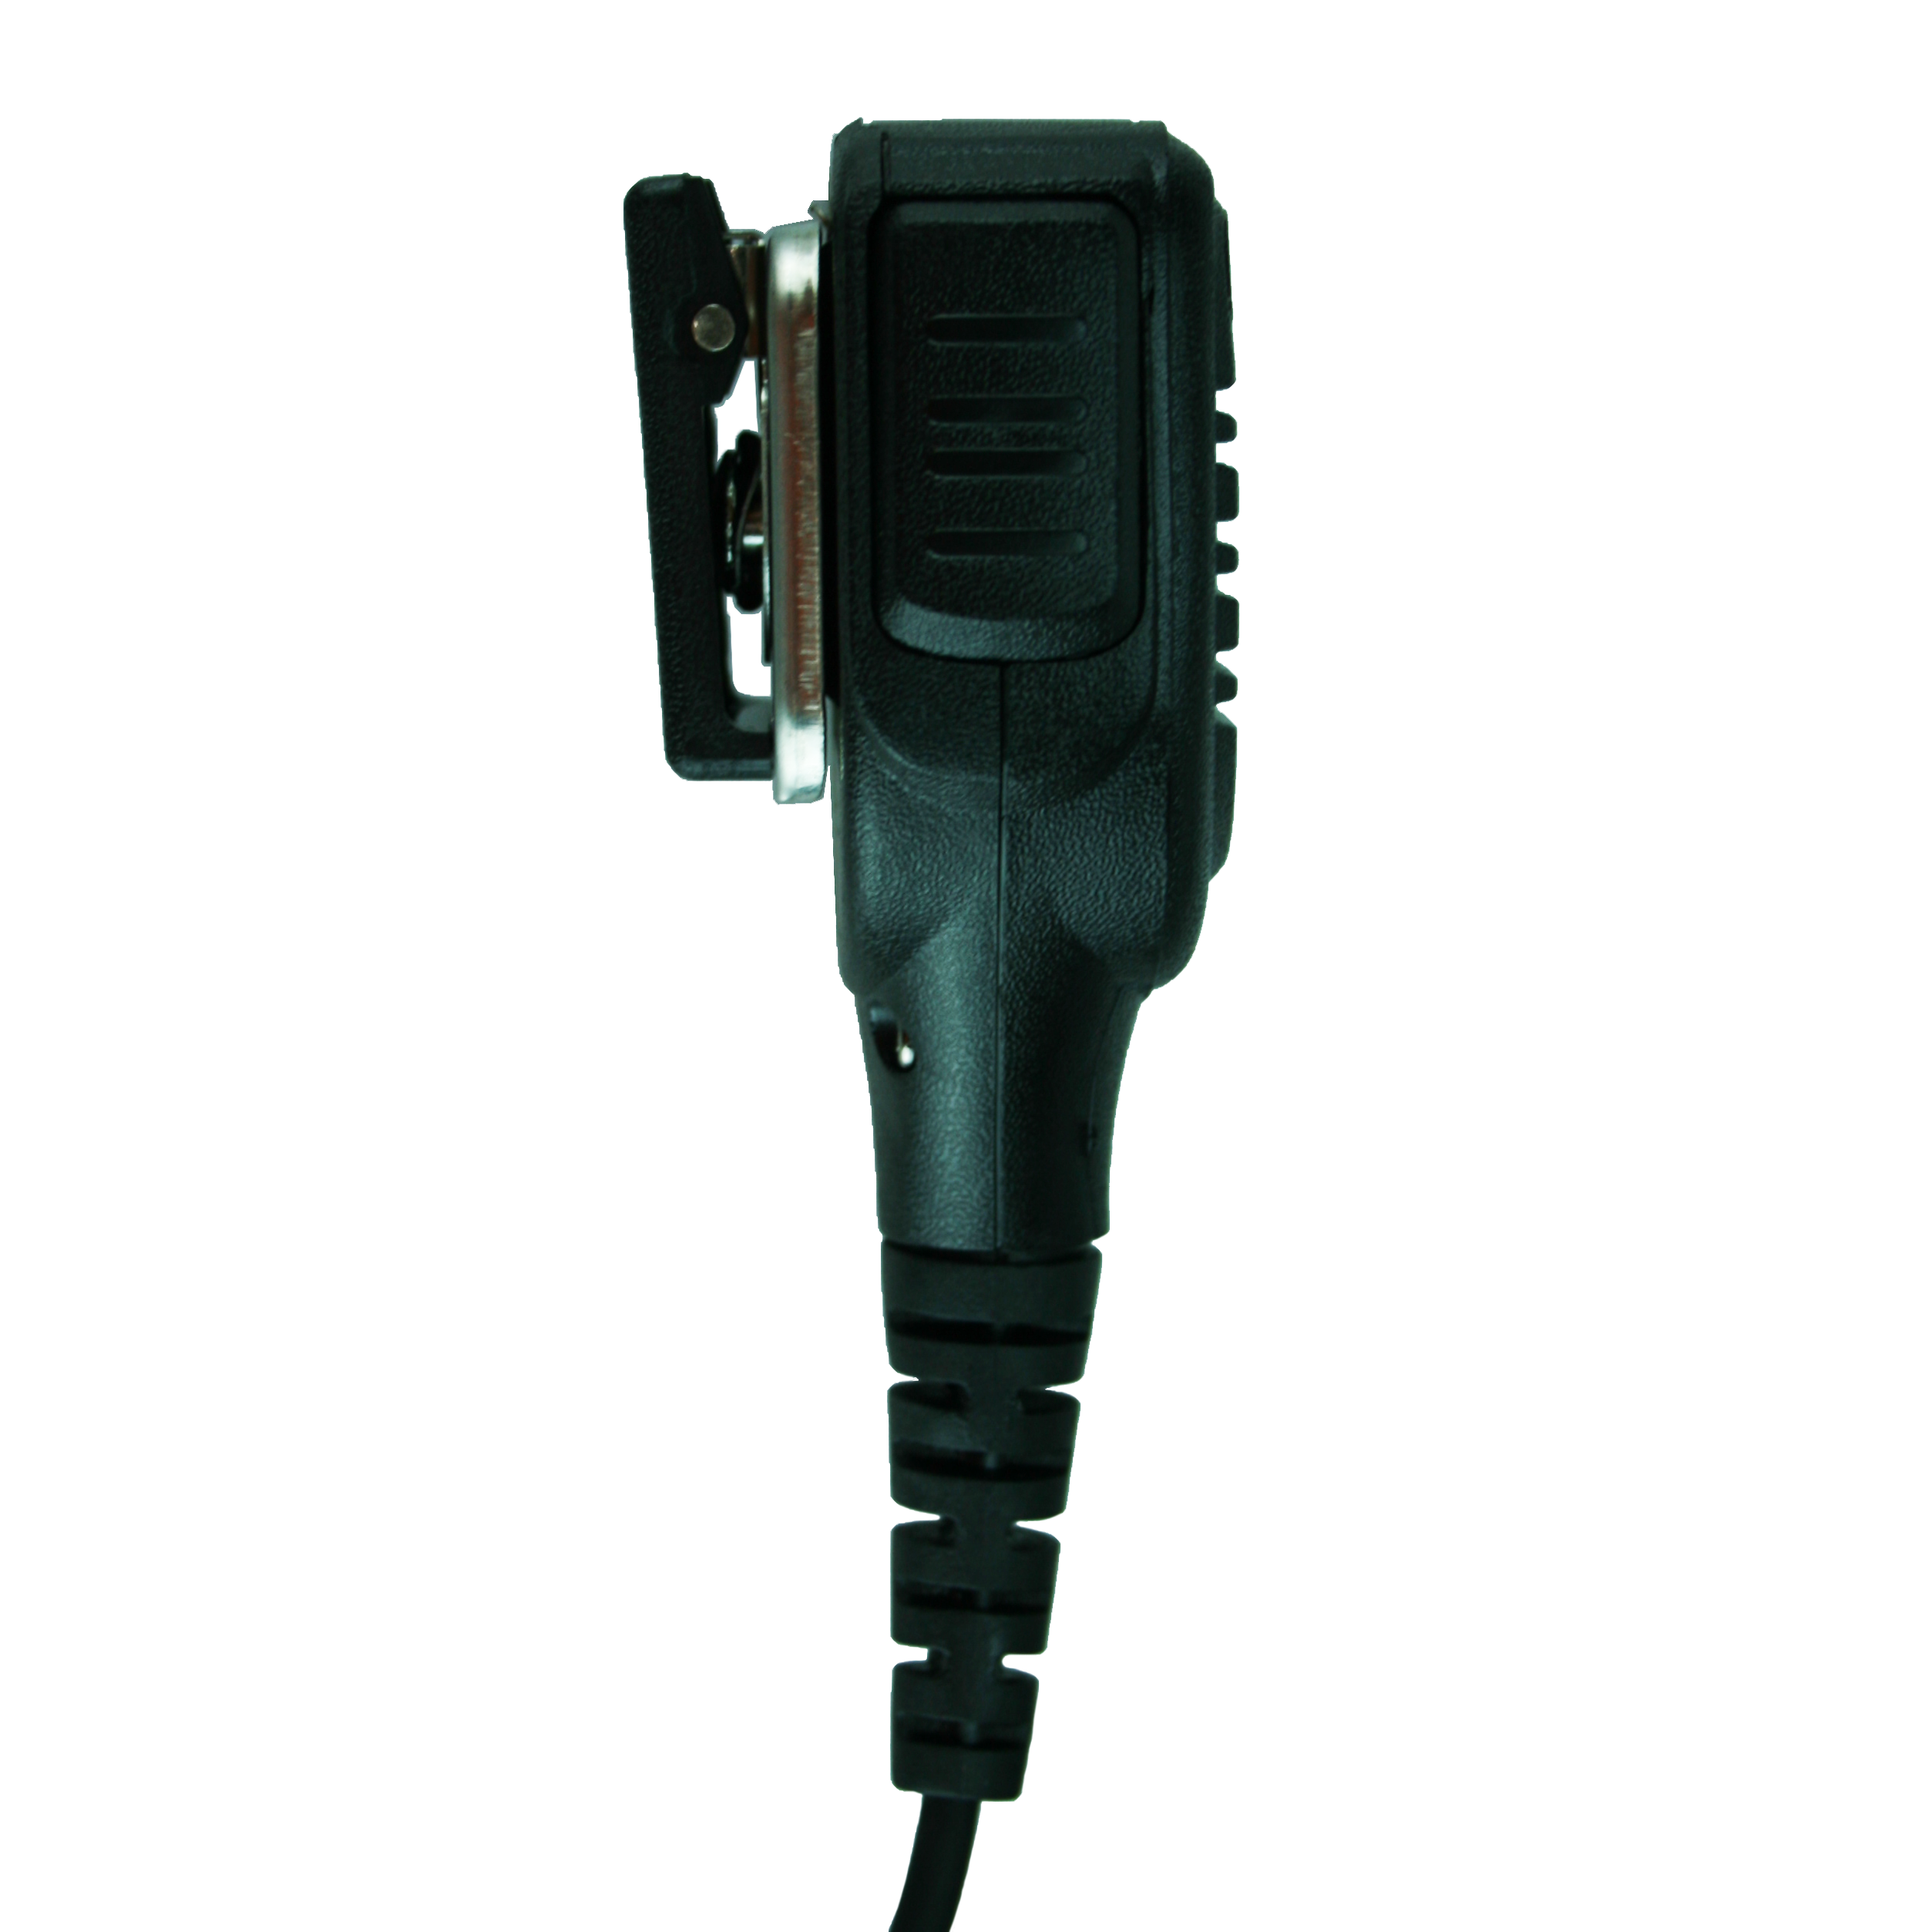 Remote Speaker Mic fits XPR6350 XPR6550 XPR7350e XPR7550e Radio PMMN4025